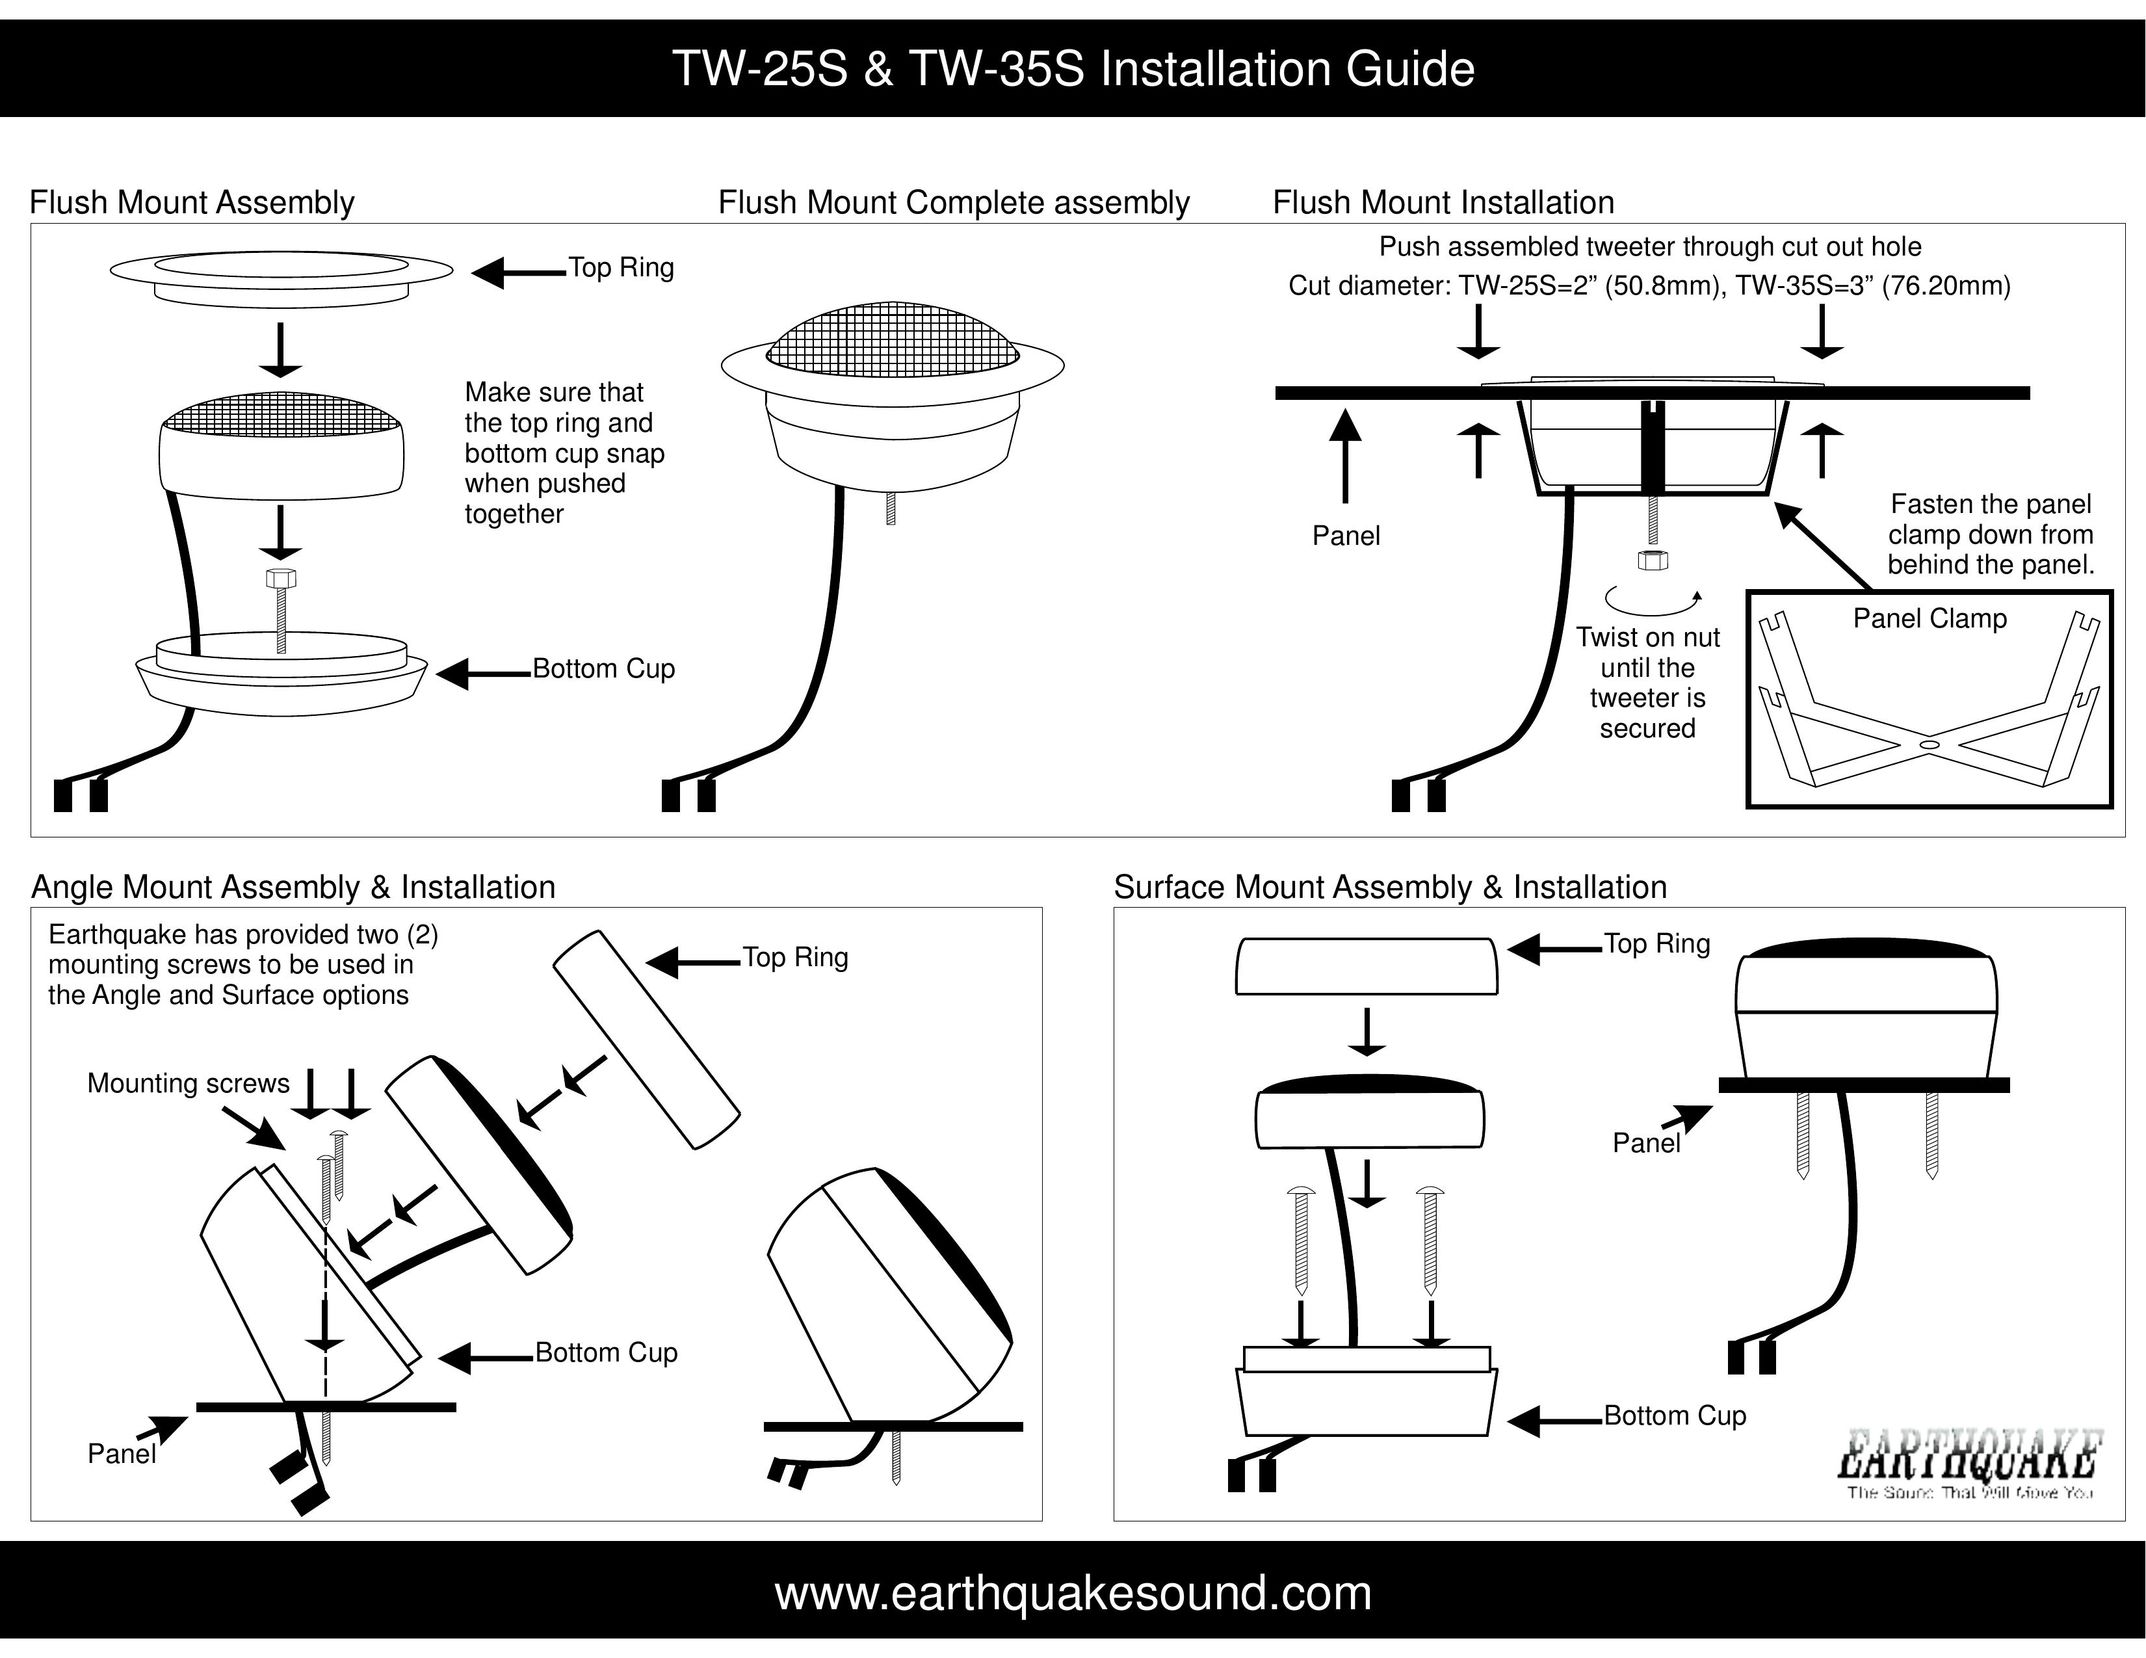 Earthquake Sound TW-25S Indoor Furnishings User Manual